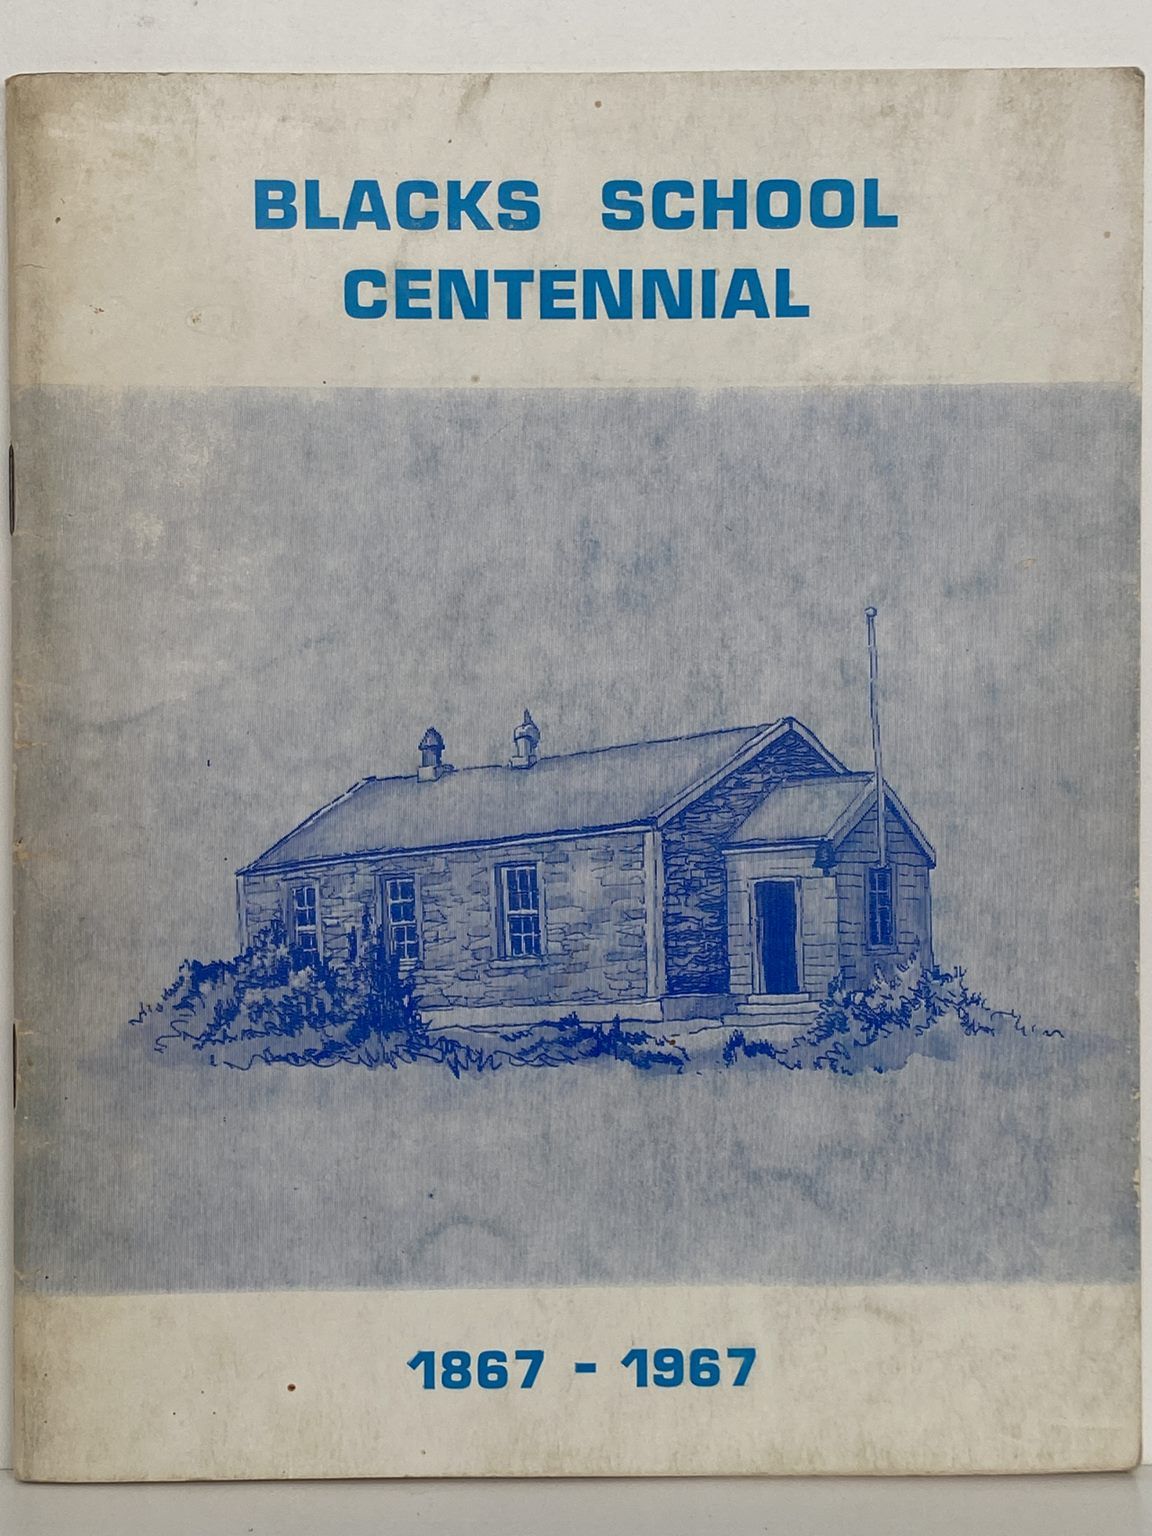 BLACKS SCHOOL CENTENNIAL 1867 - 1967